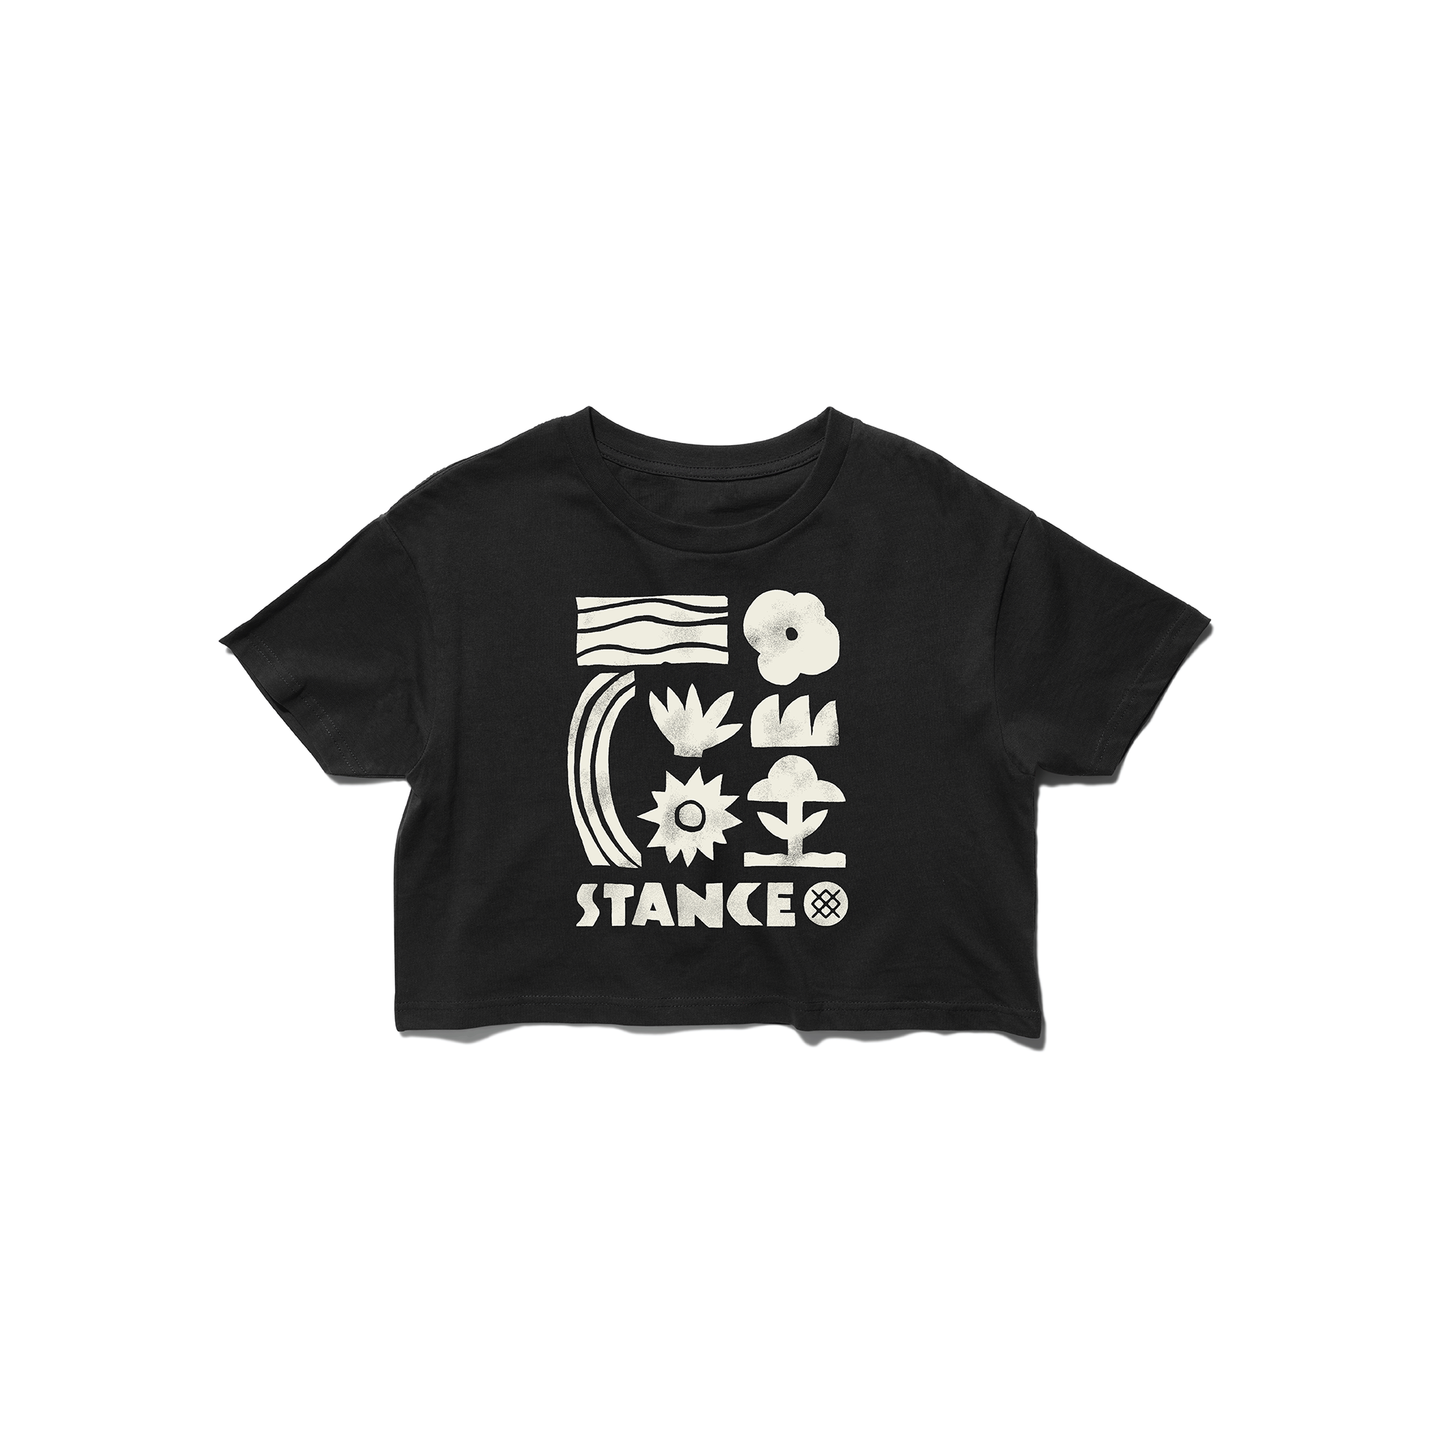 Stance Stamp Crop T-Shirt Black